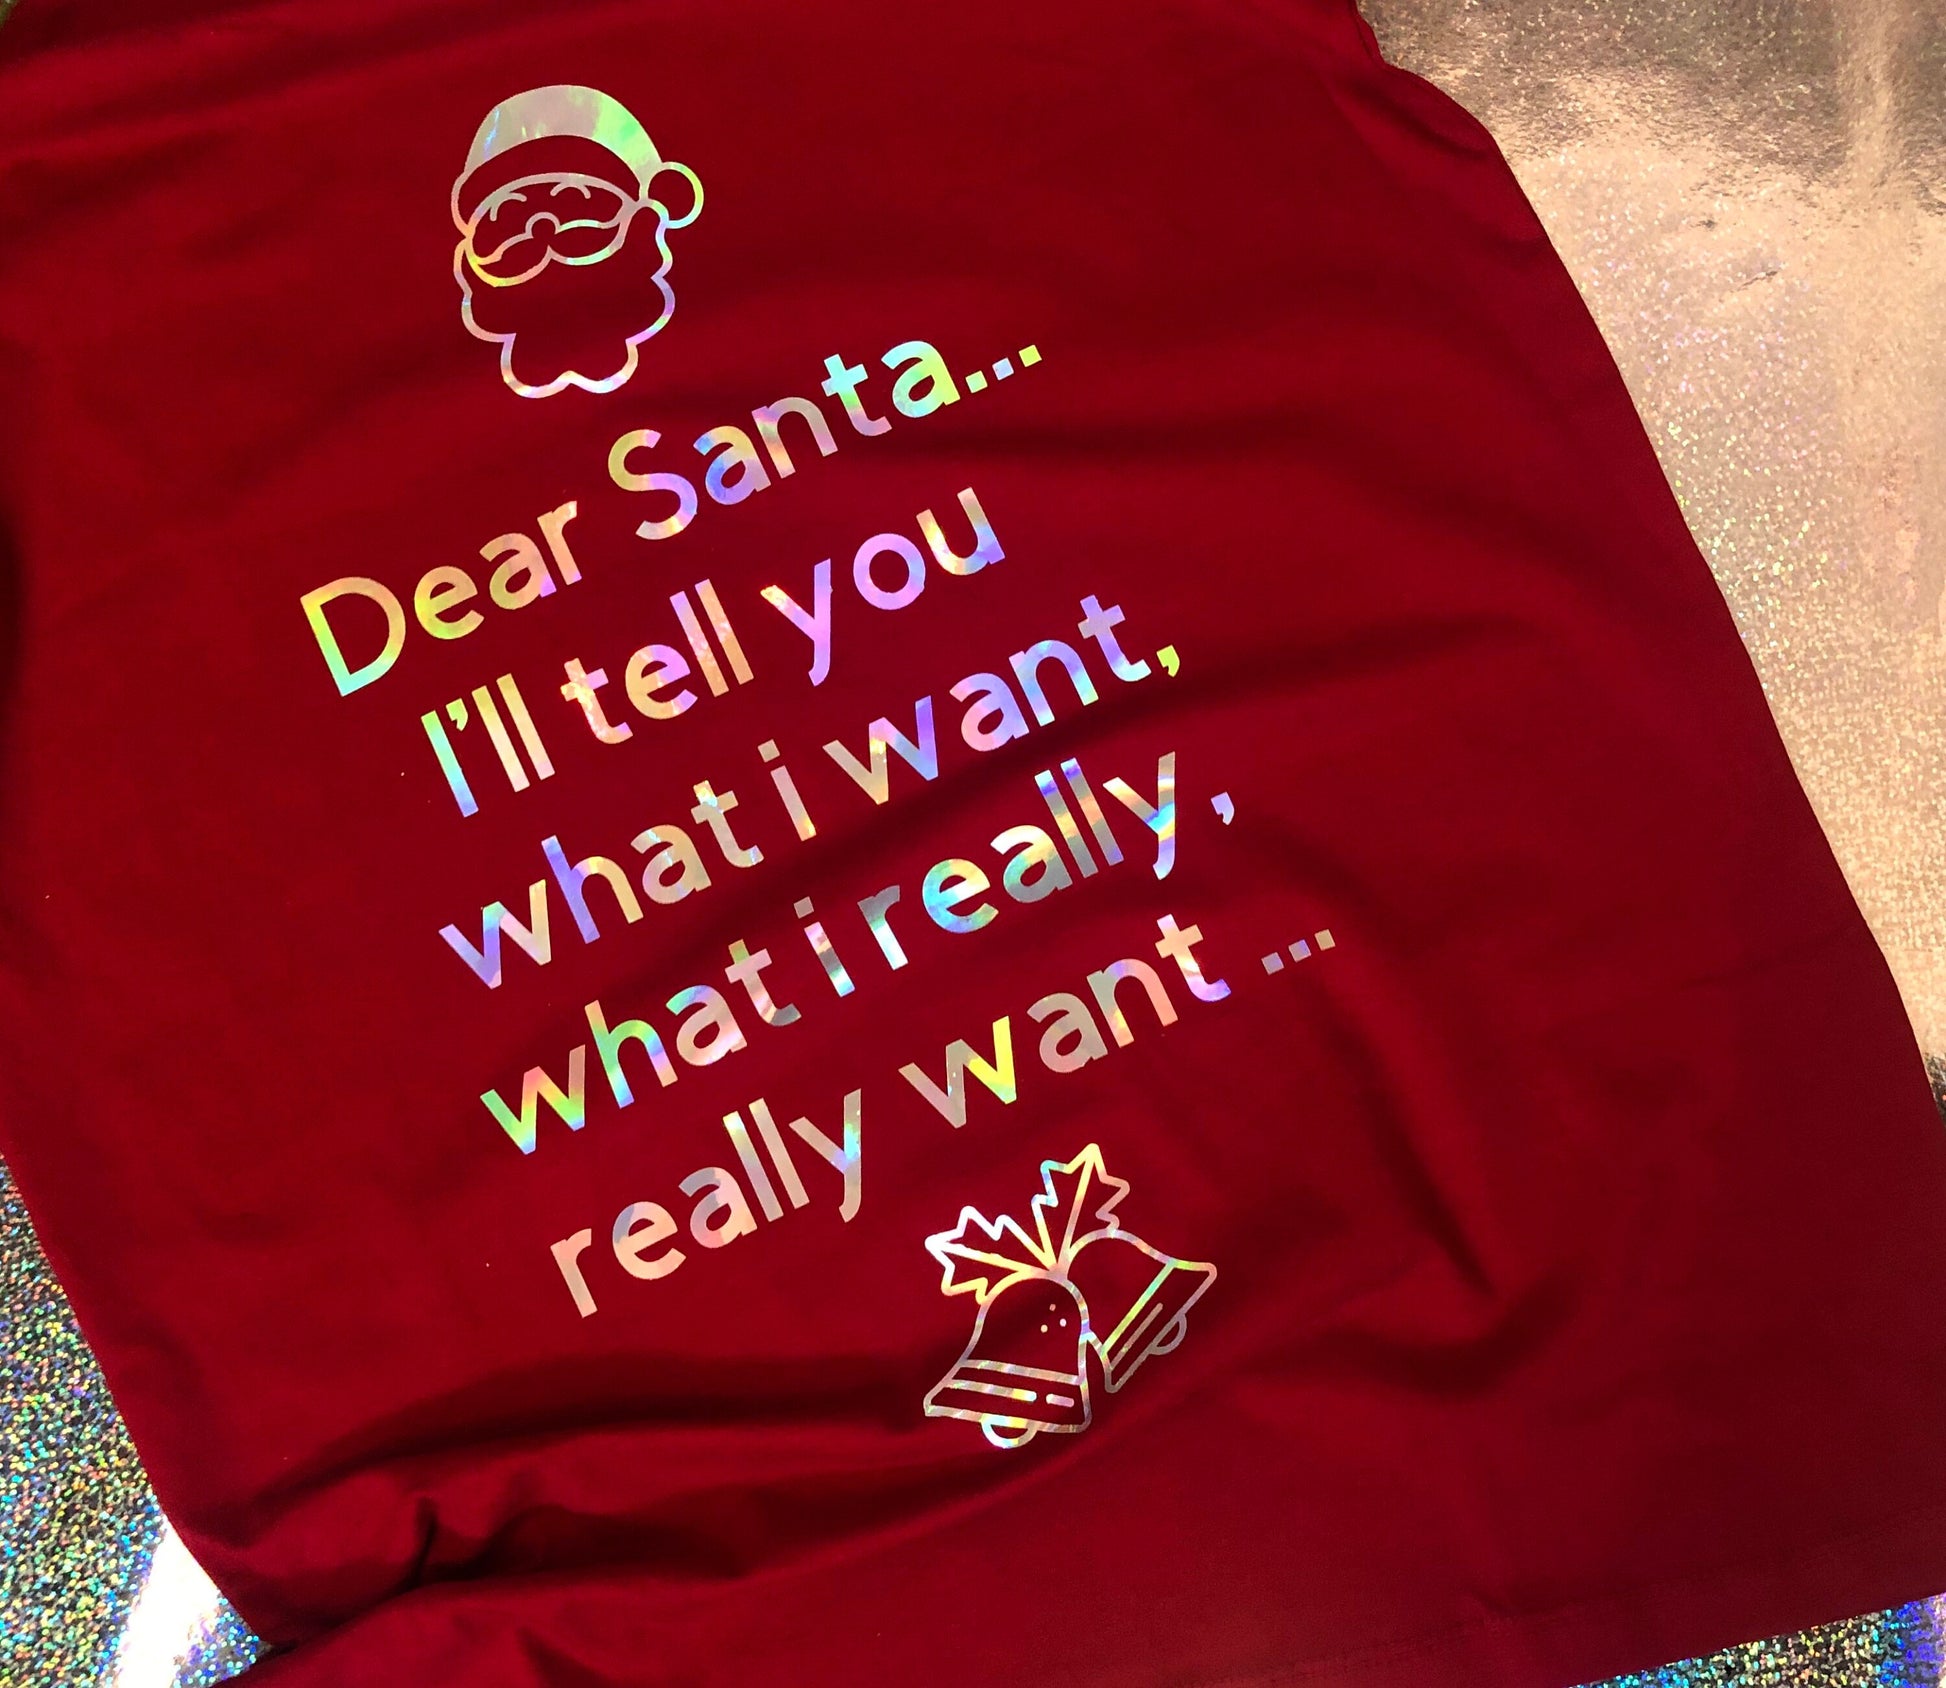 Dear Santa, Tell you what I really, really want Christmas Slogan T-shirt